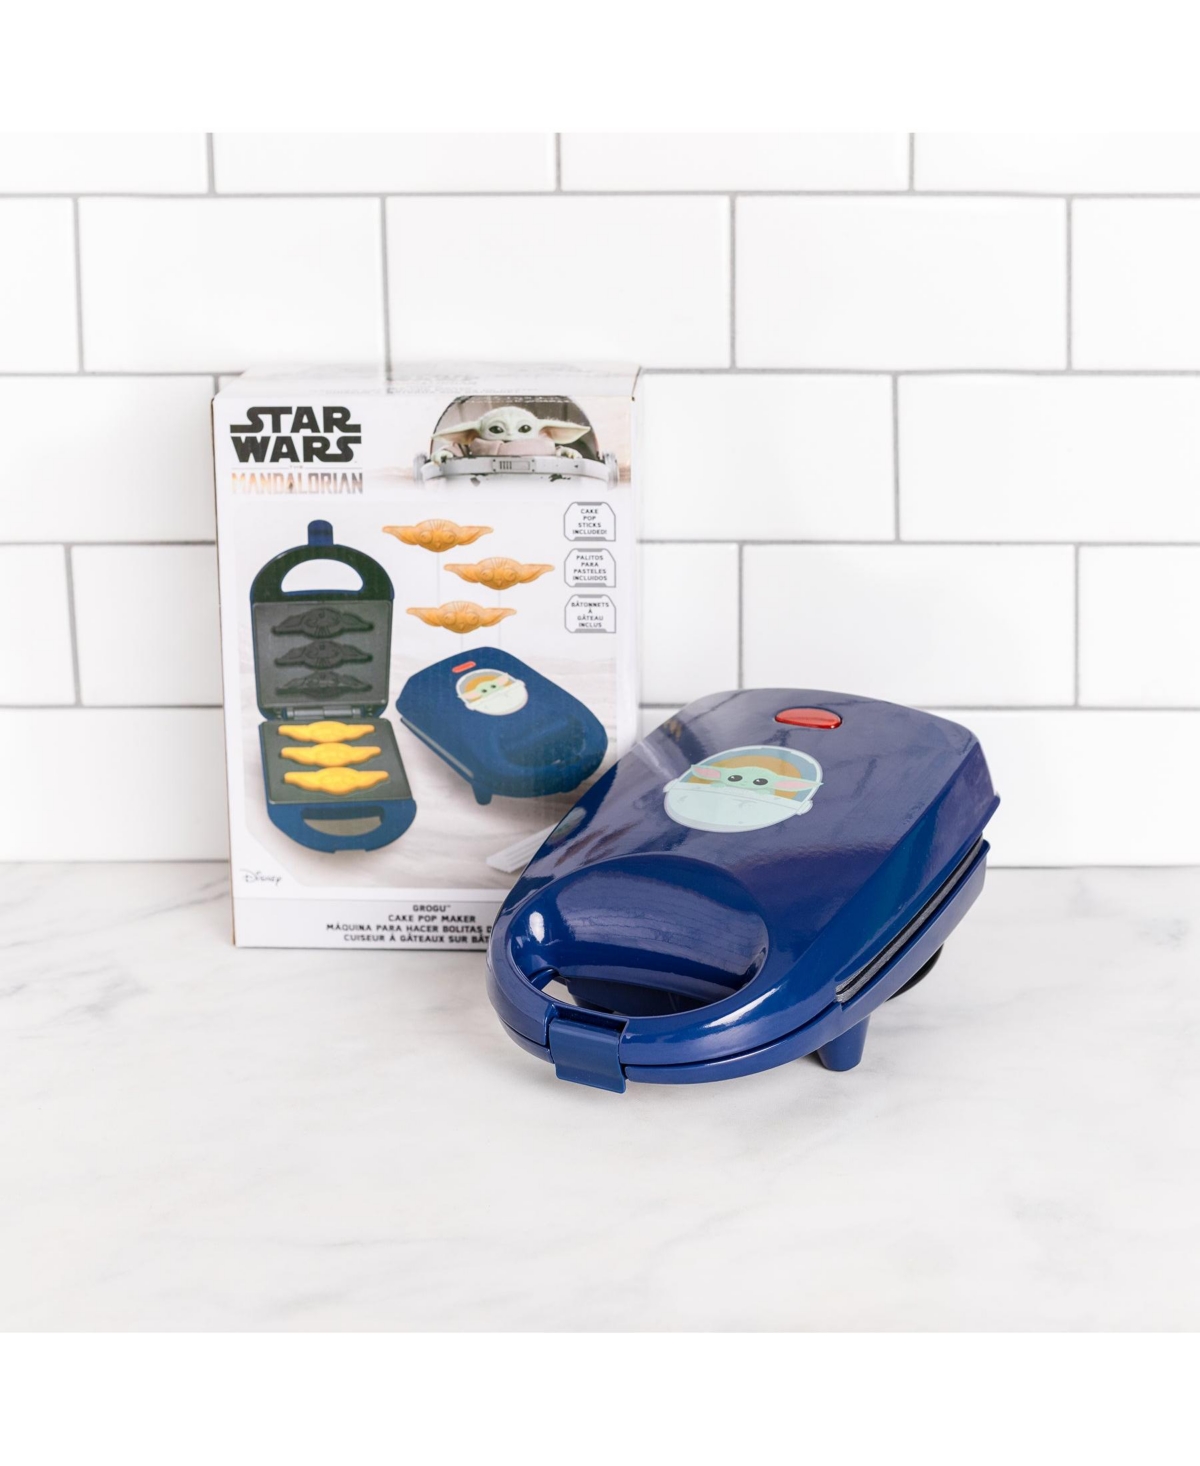 Uncanny Brands Star Wars The Mandalorian Grogu Cake Pop Maker- Baby Yoda Treats - Makes 3 Child Cake Pops In Blue